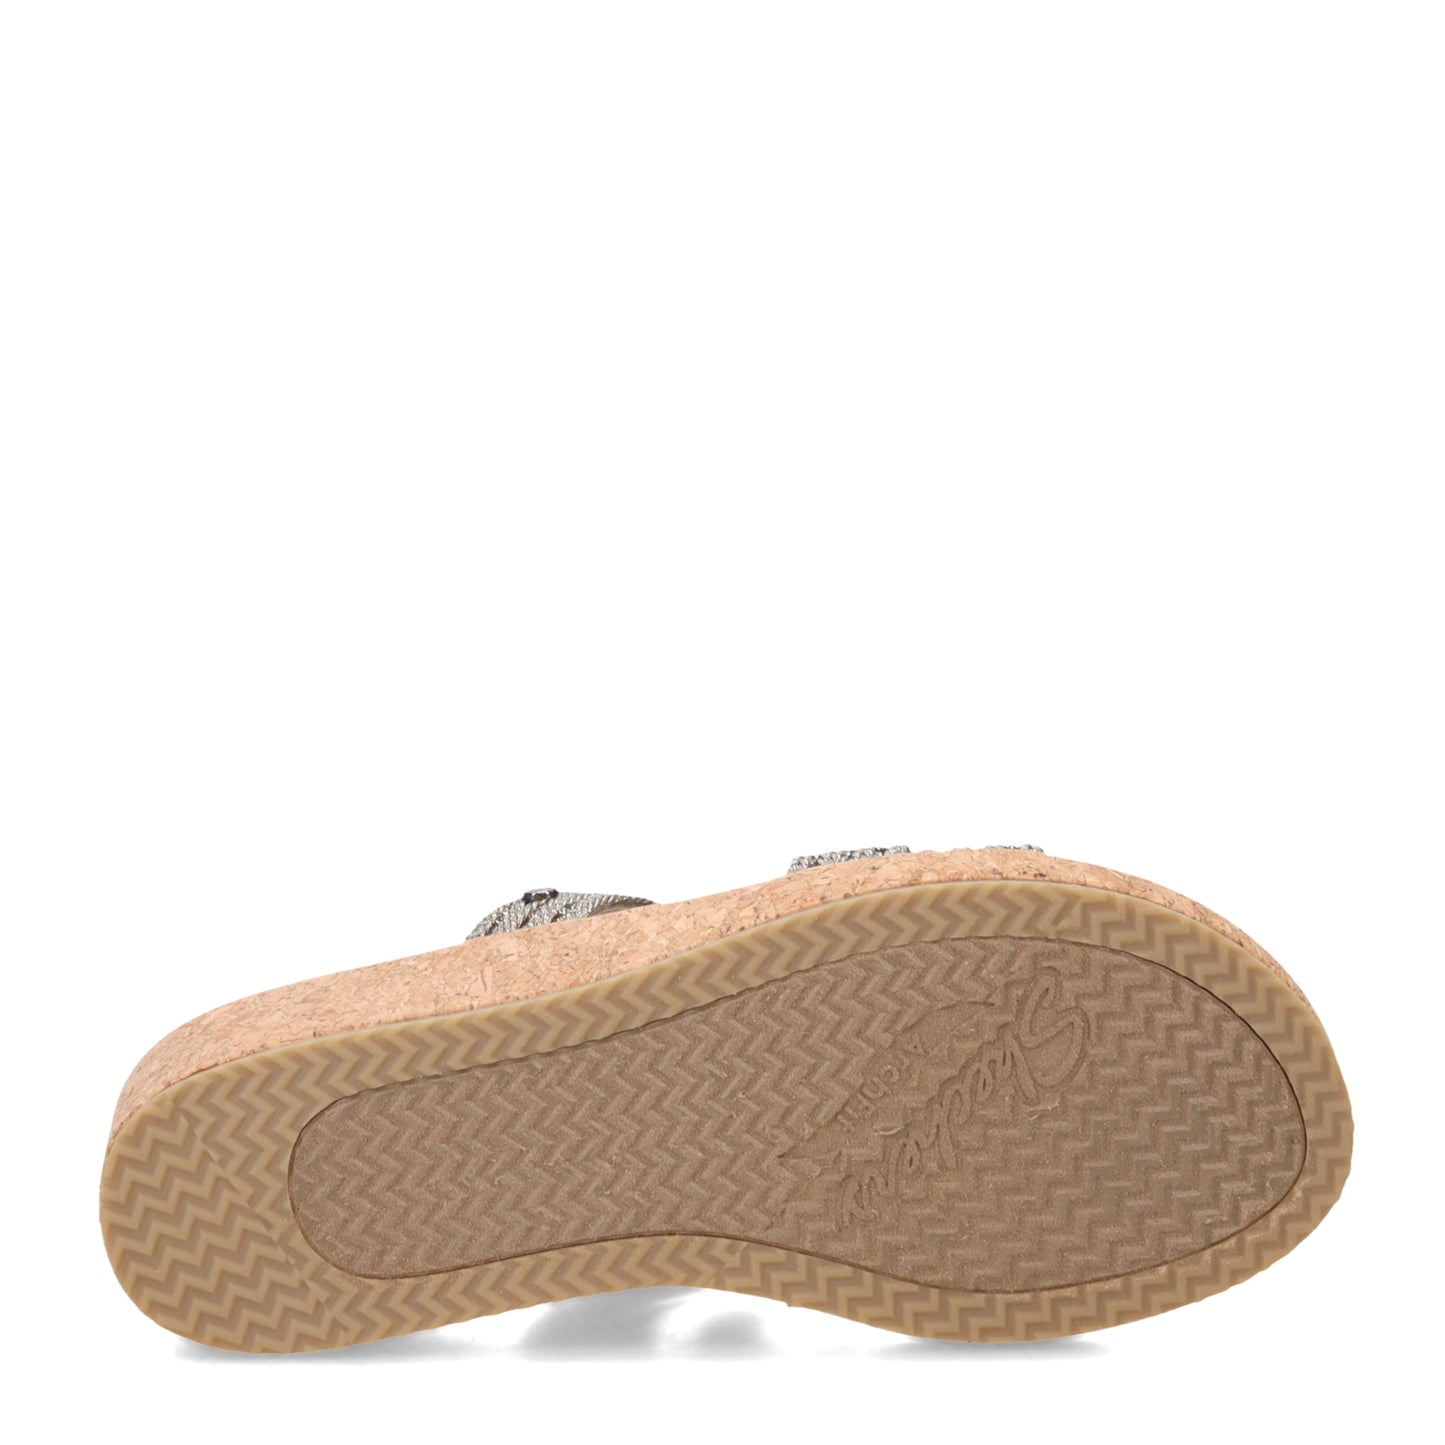 Peltz Shoes  Women's Skechers Arch Fit Beverlee - Always Classy Sandal Pewter 119548-PEW